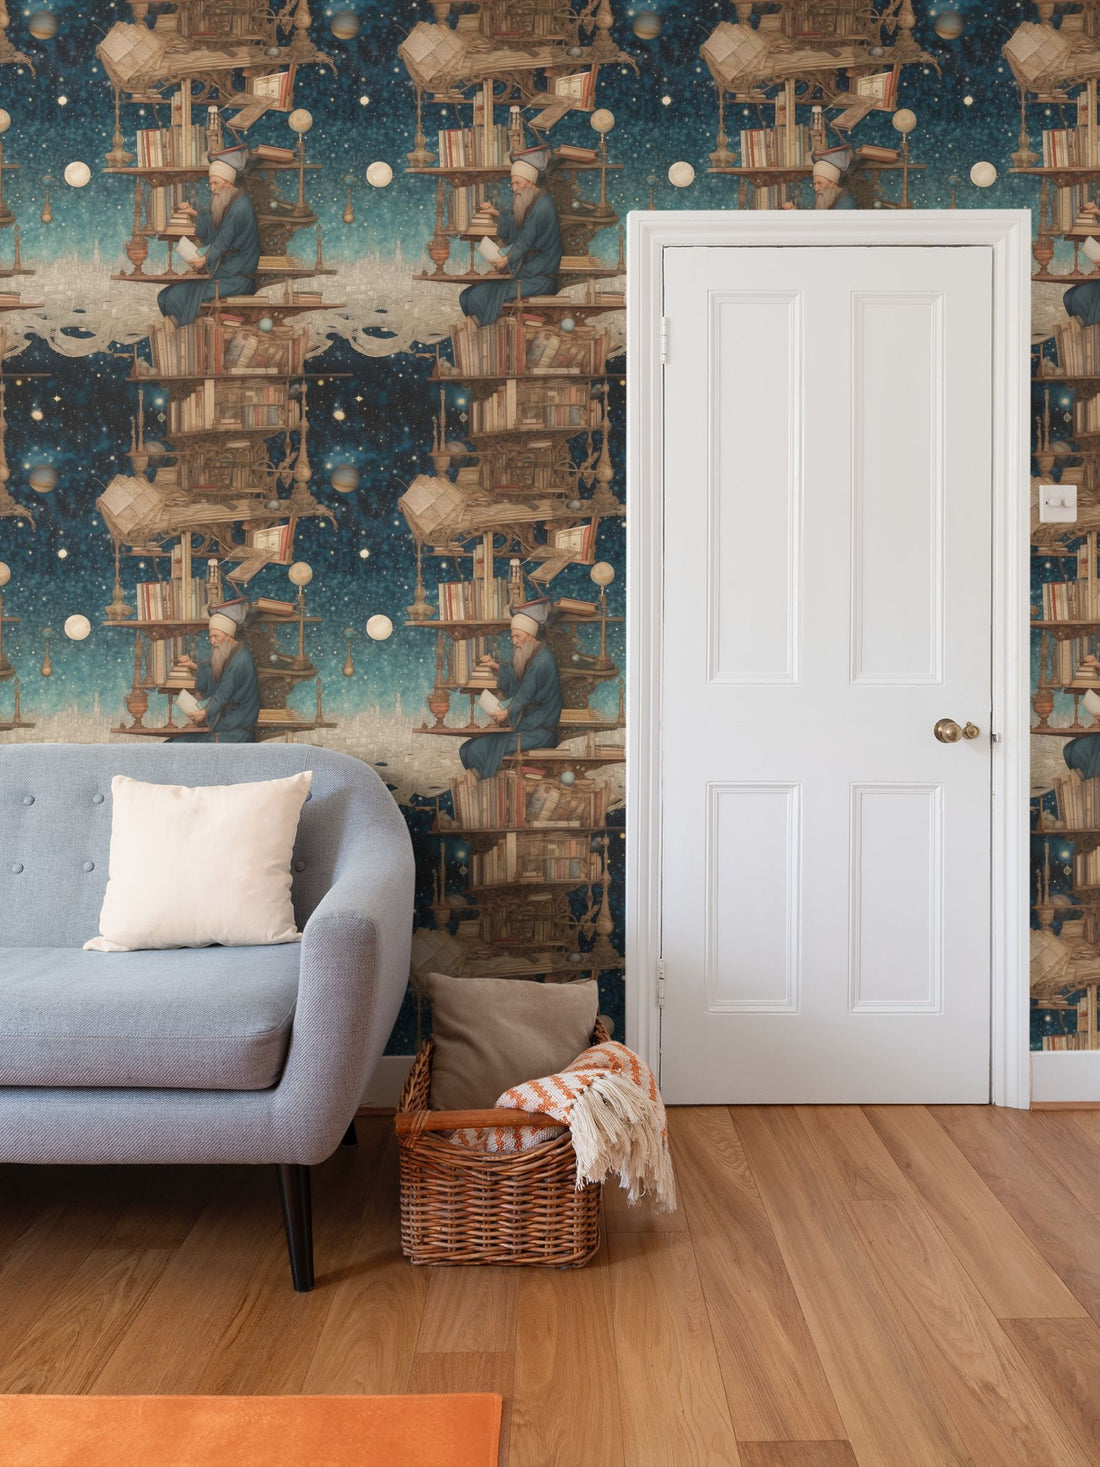 wallpaper design tips tricks and hacks. wallpaper adhesive glue availa